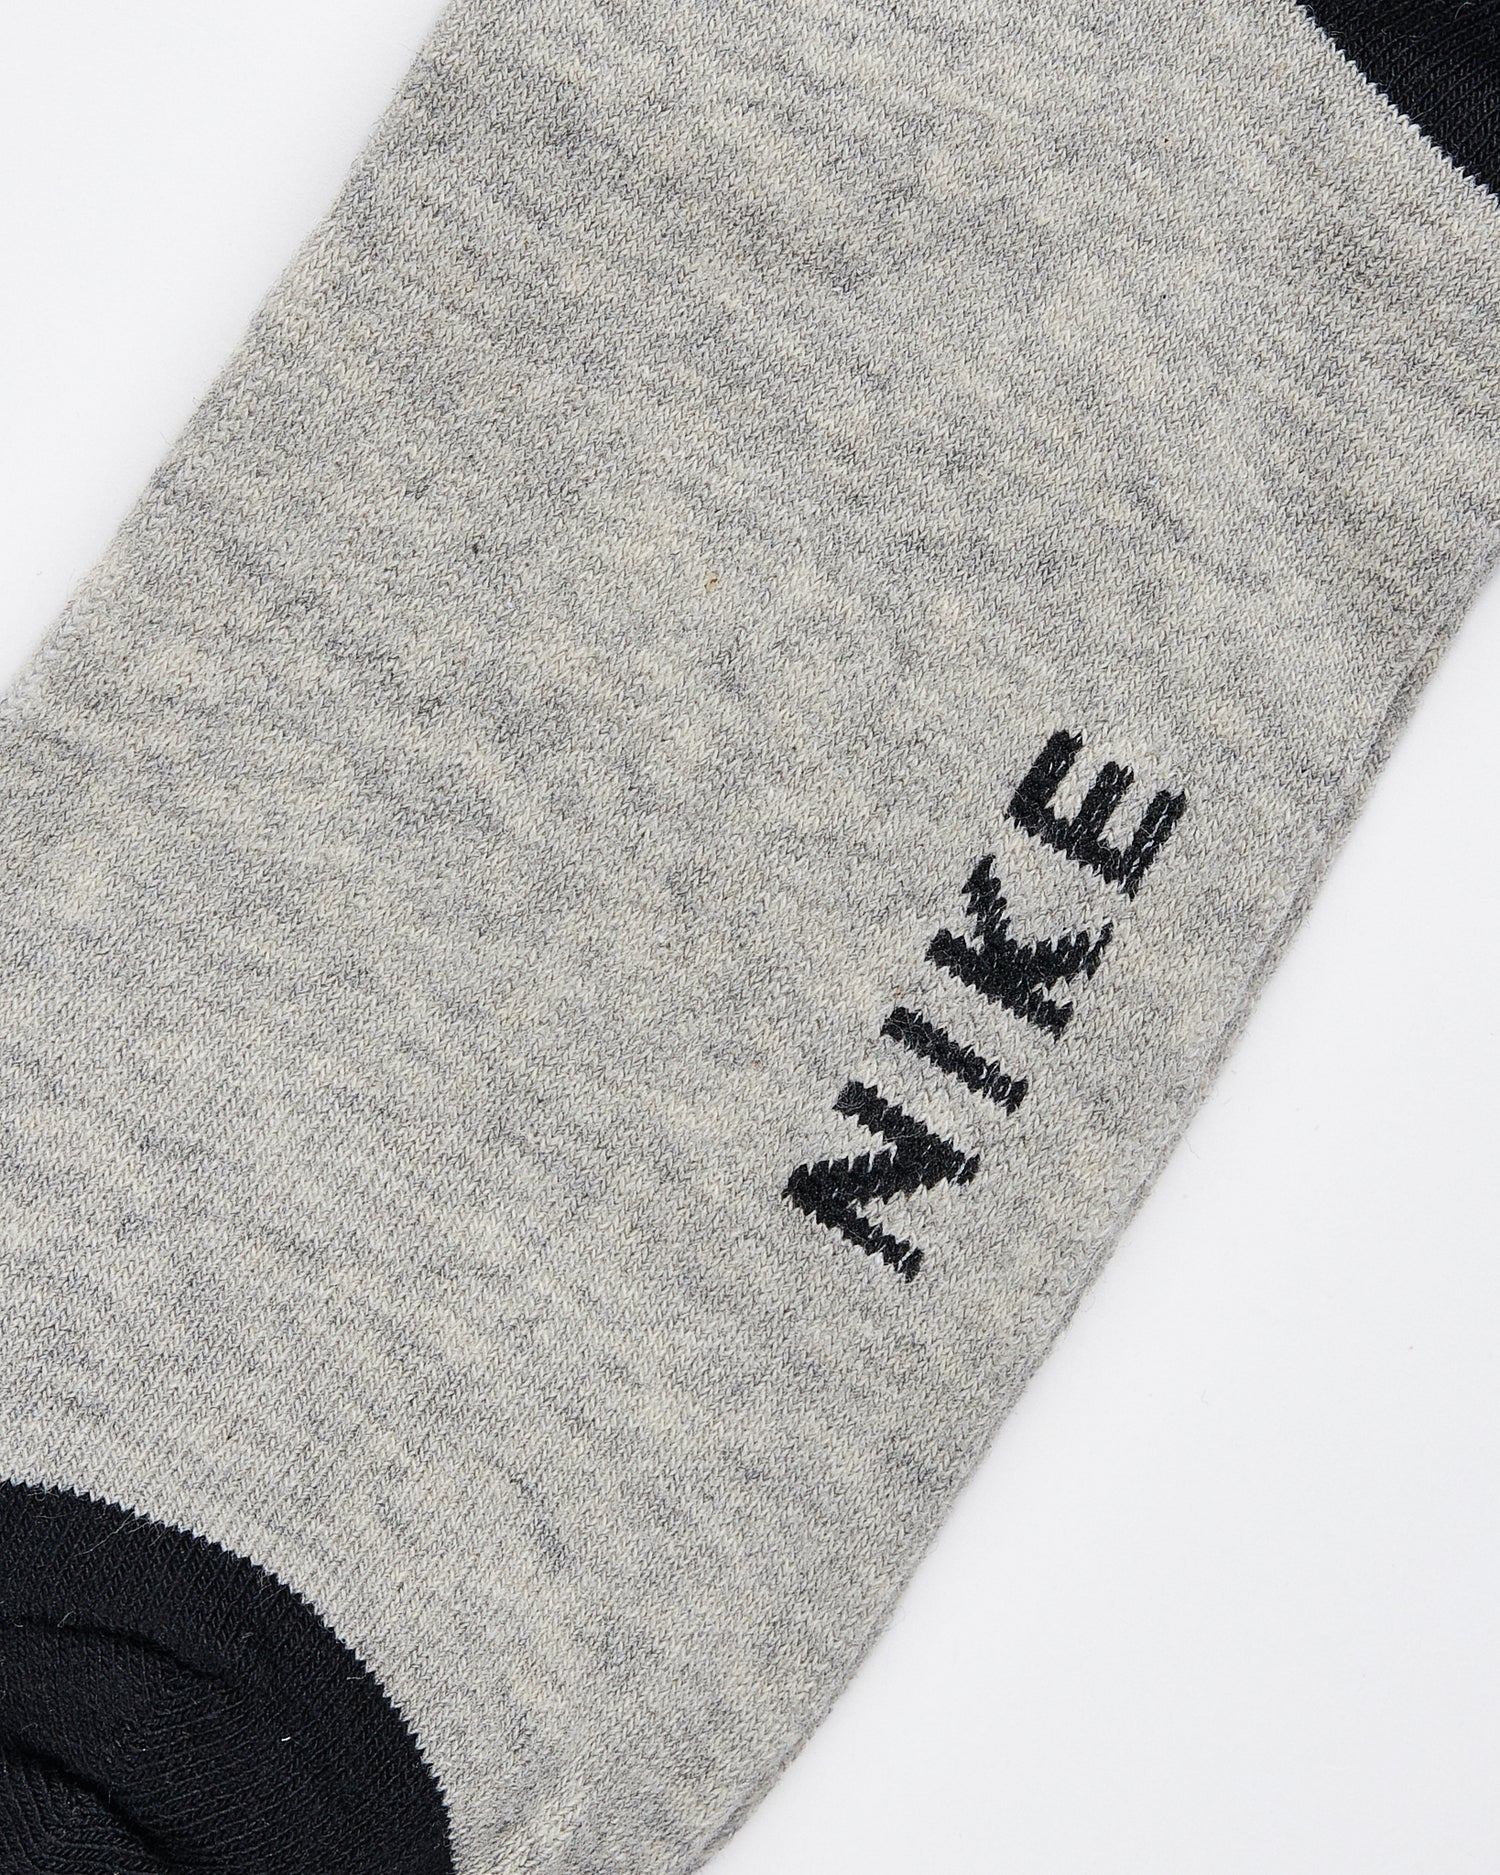 NIK Grey 1 Pairs Quarter Socks 2.10